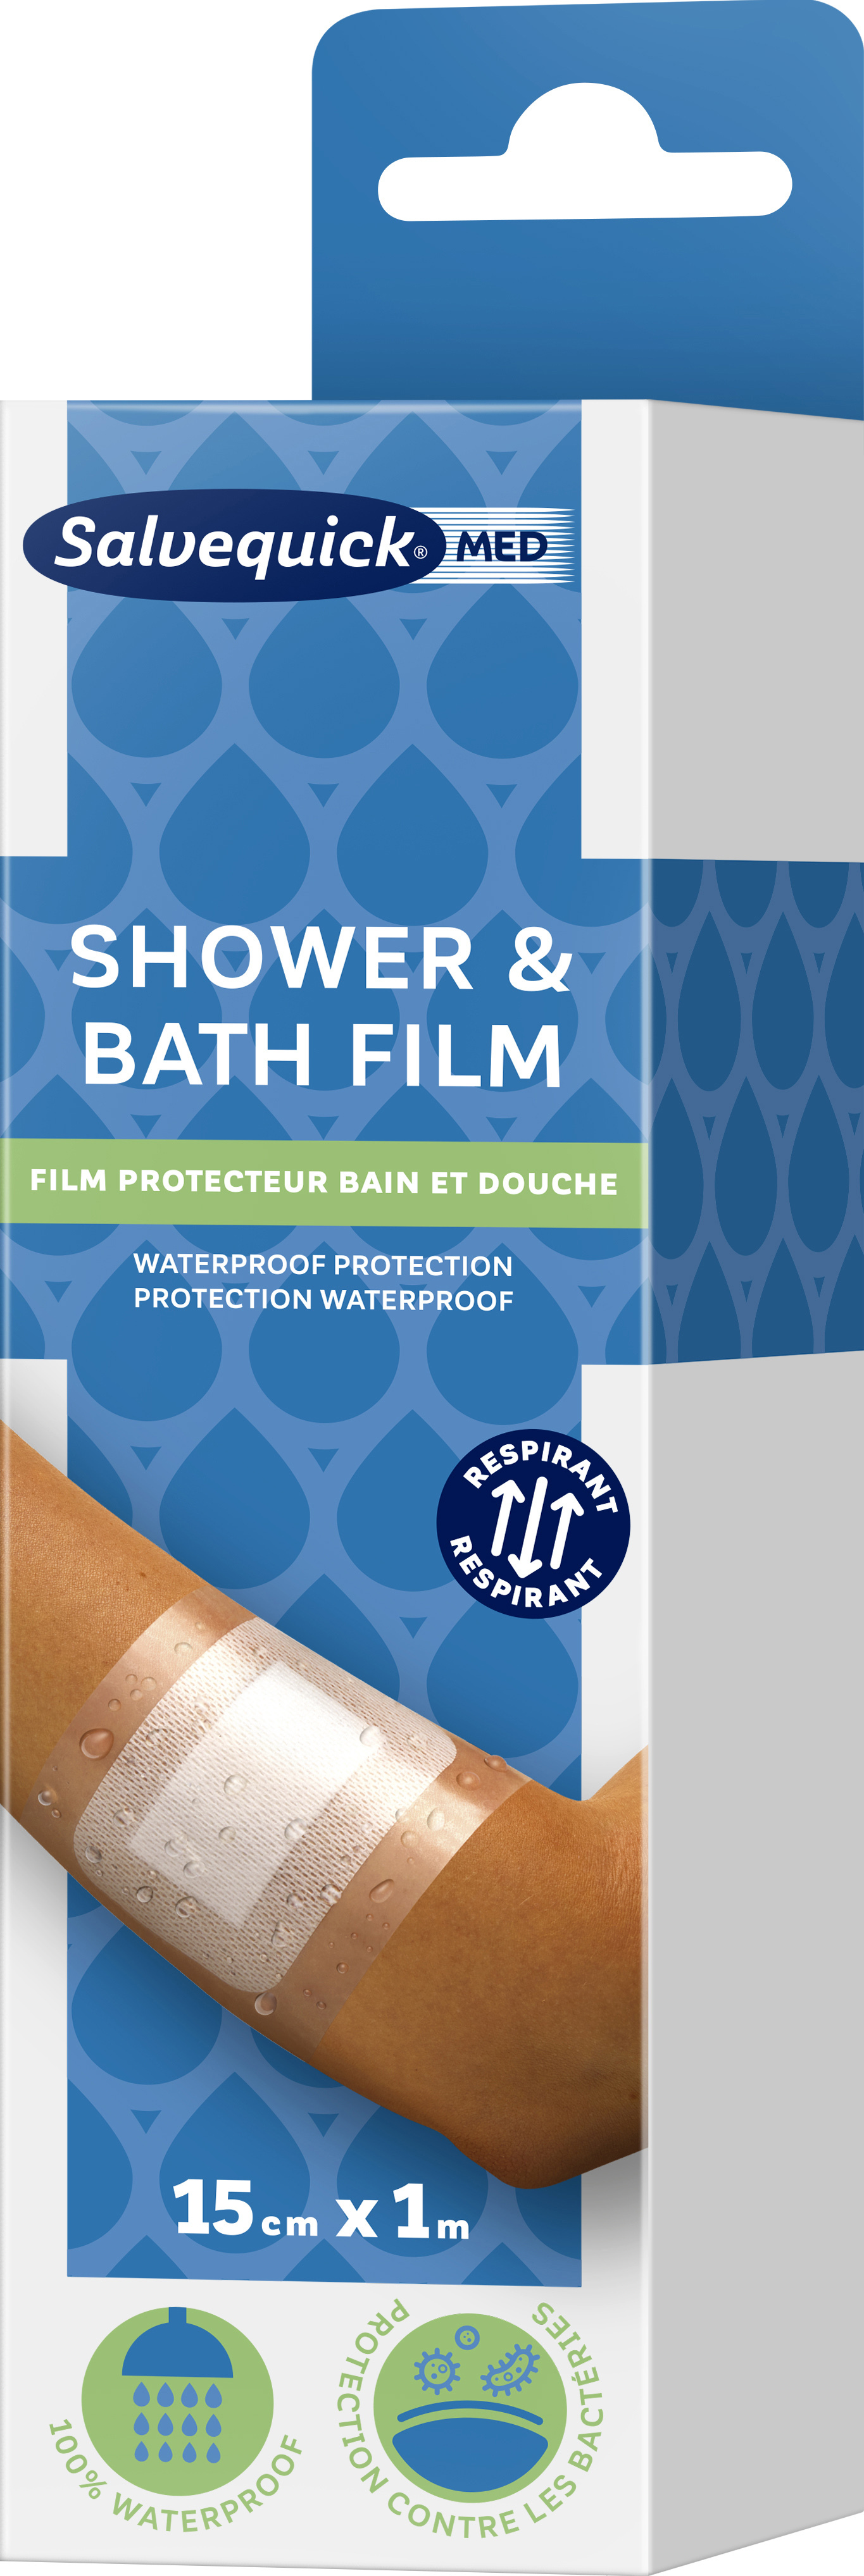 Salvequick MED Shower & Bath Film 15 cm x 1 m